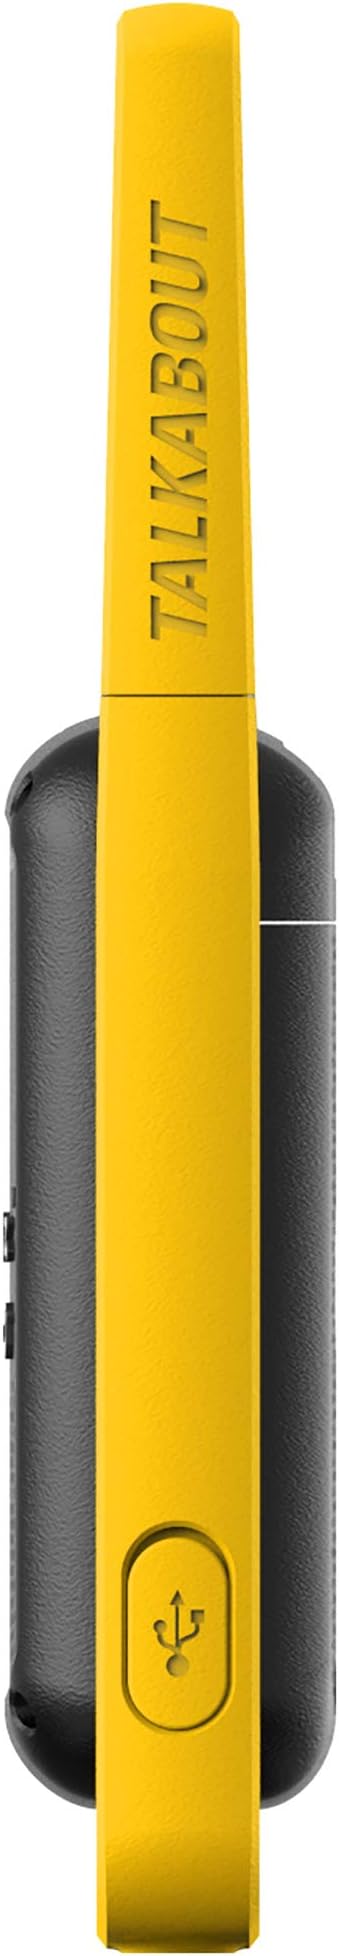 Motorola Solutions T475 Extreme Two-Way Radio Black W/Yellow